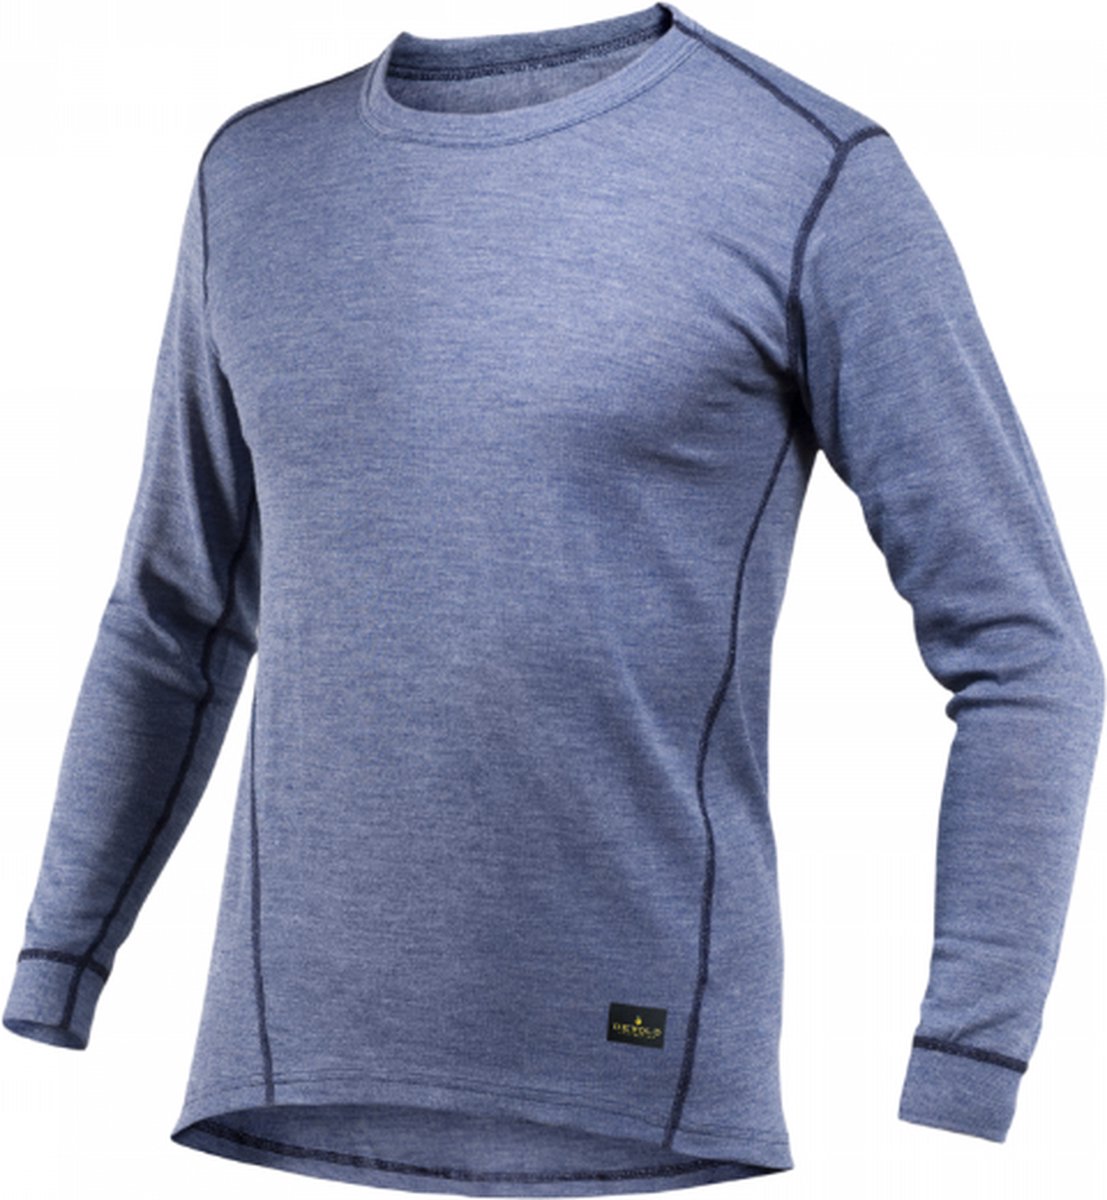 Devold Protection Vlamvertragend Shirt - Blauw maat 2XL – Longsleeve Thermo shirt